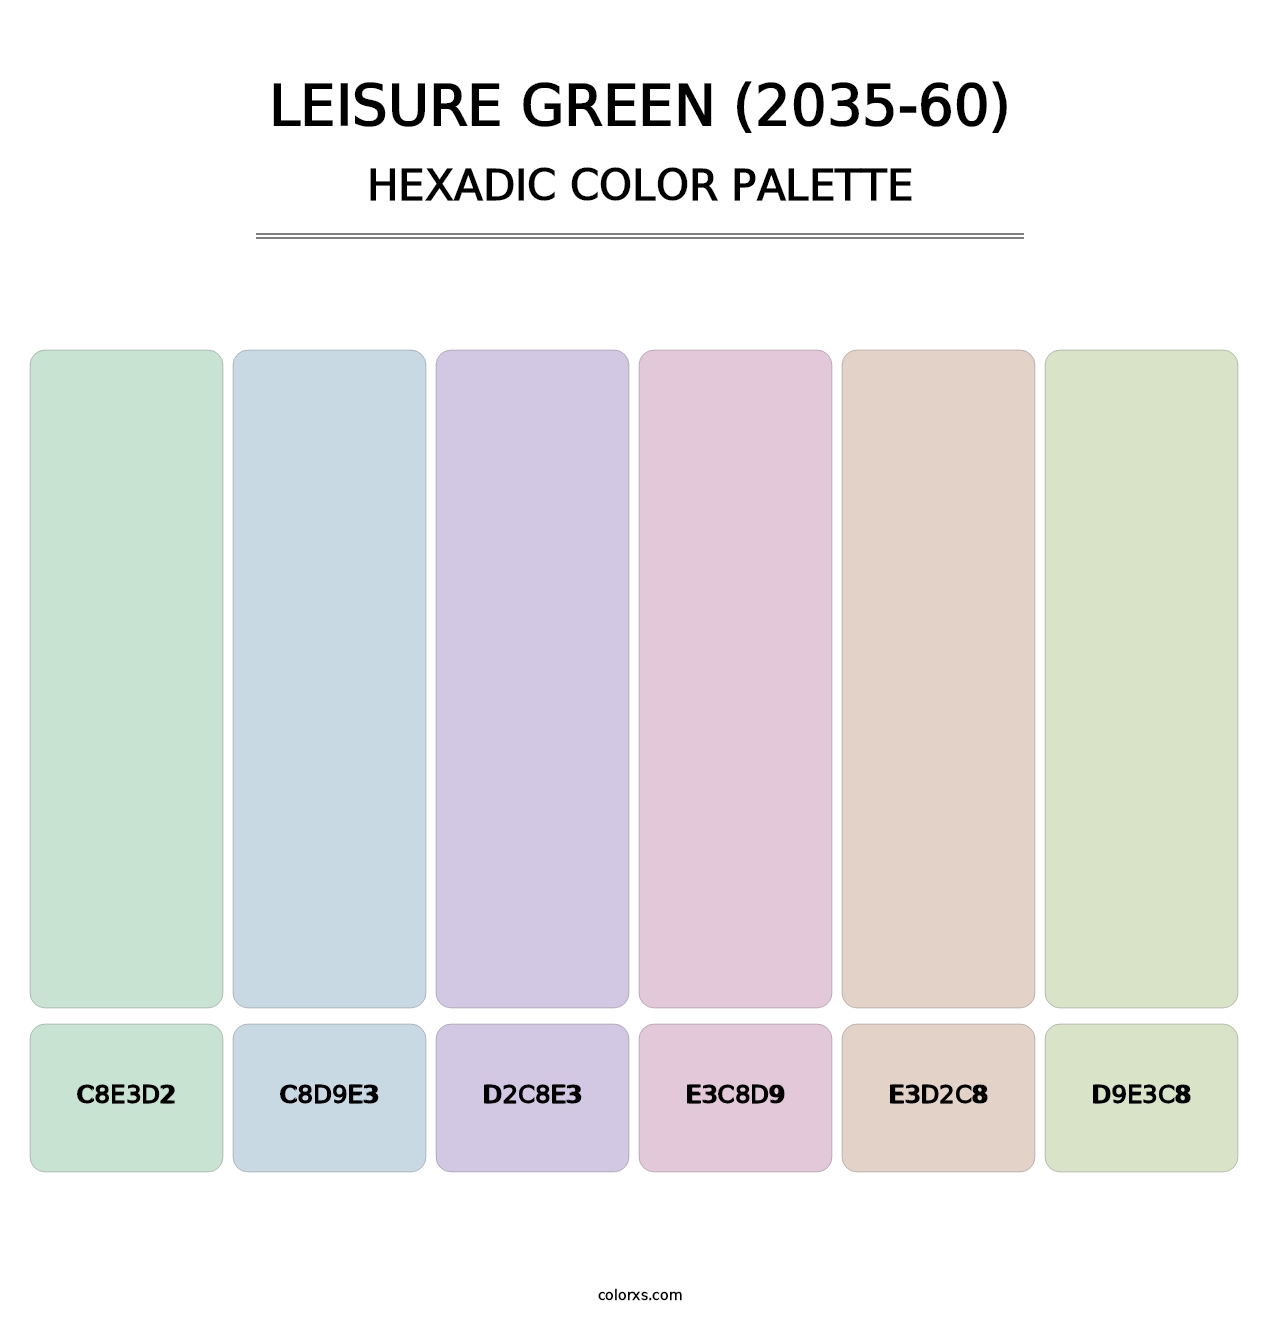 Leisure Green (2035-60) - Hexadic Color Palette